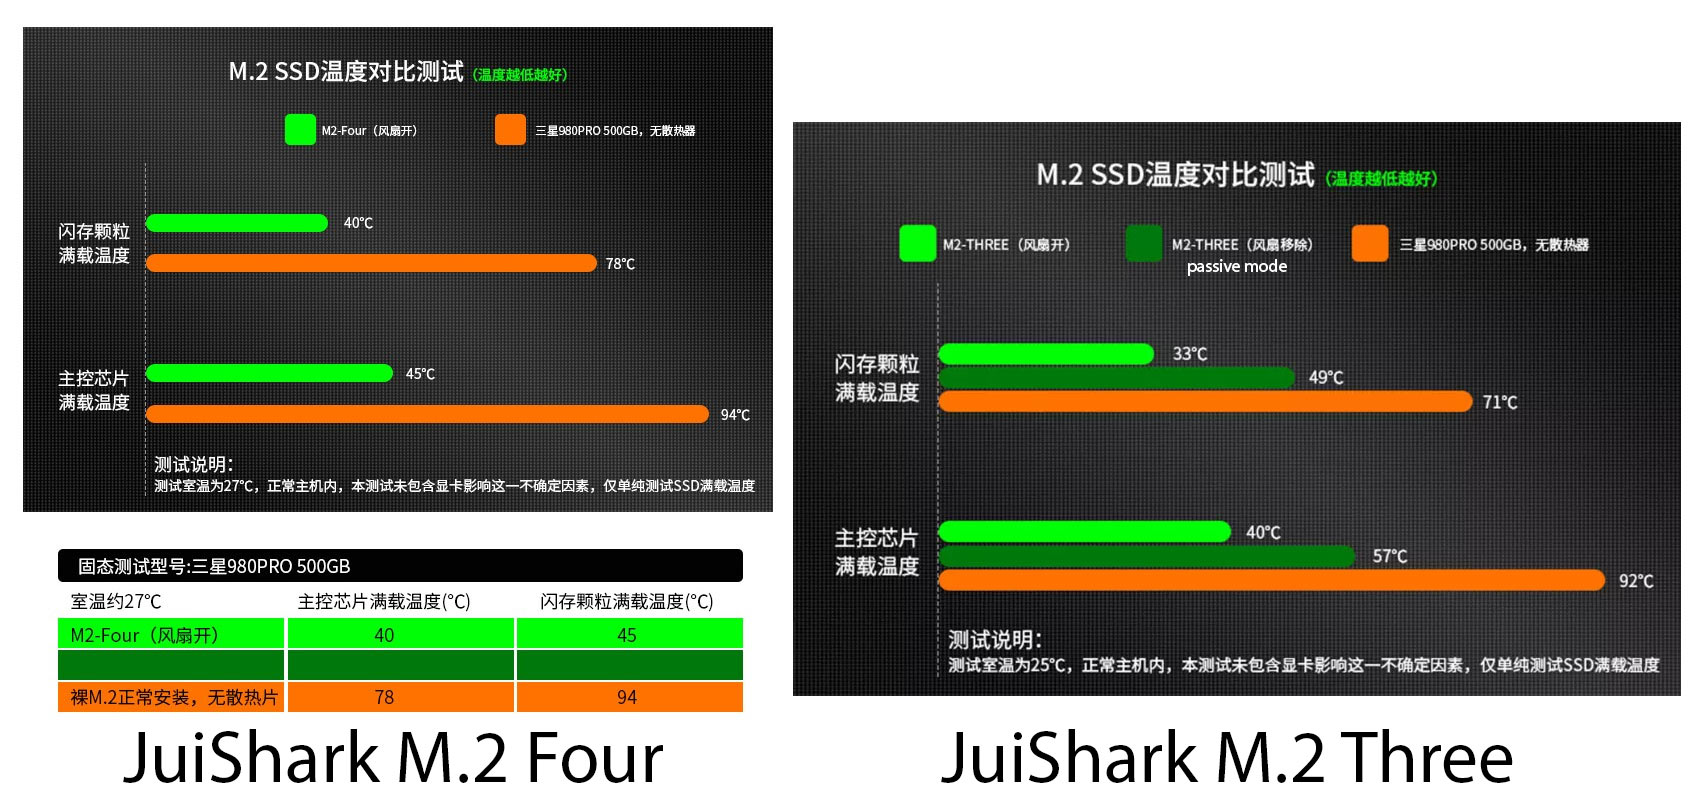 JuiShark M.2 4 SSD Cooler